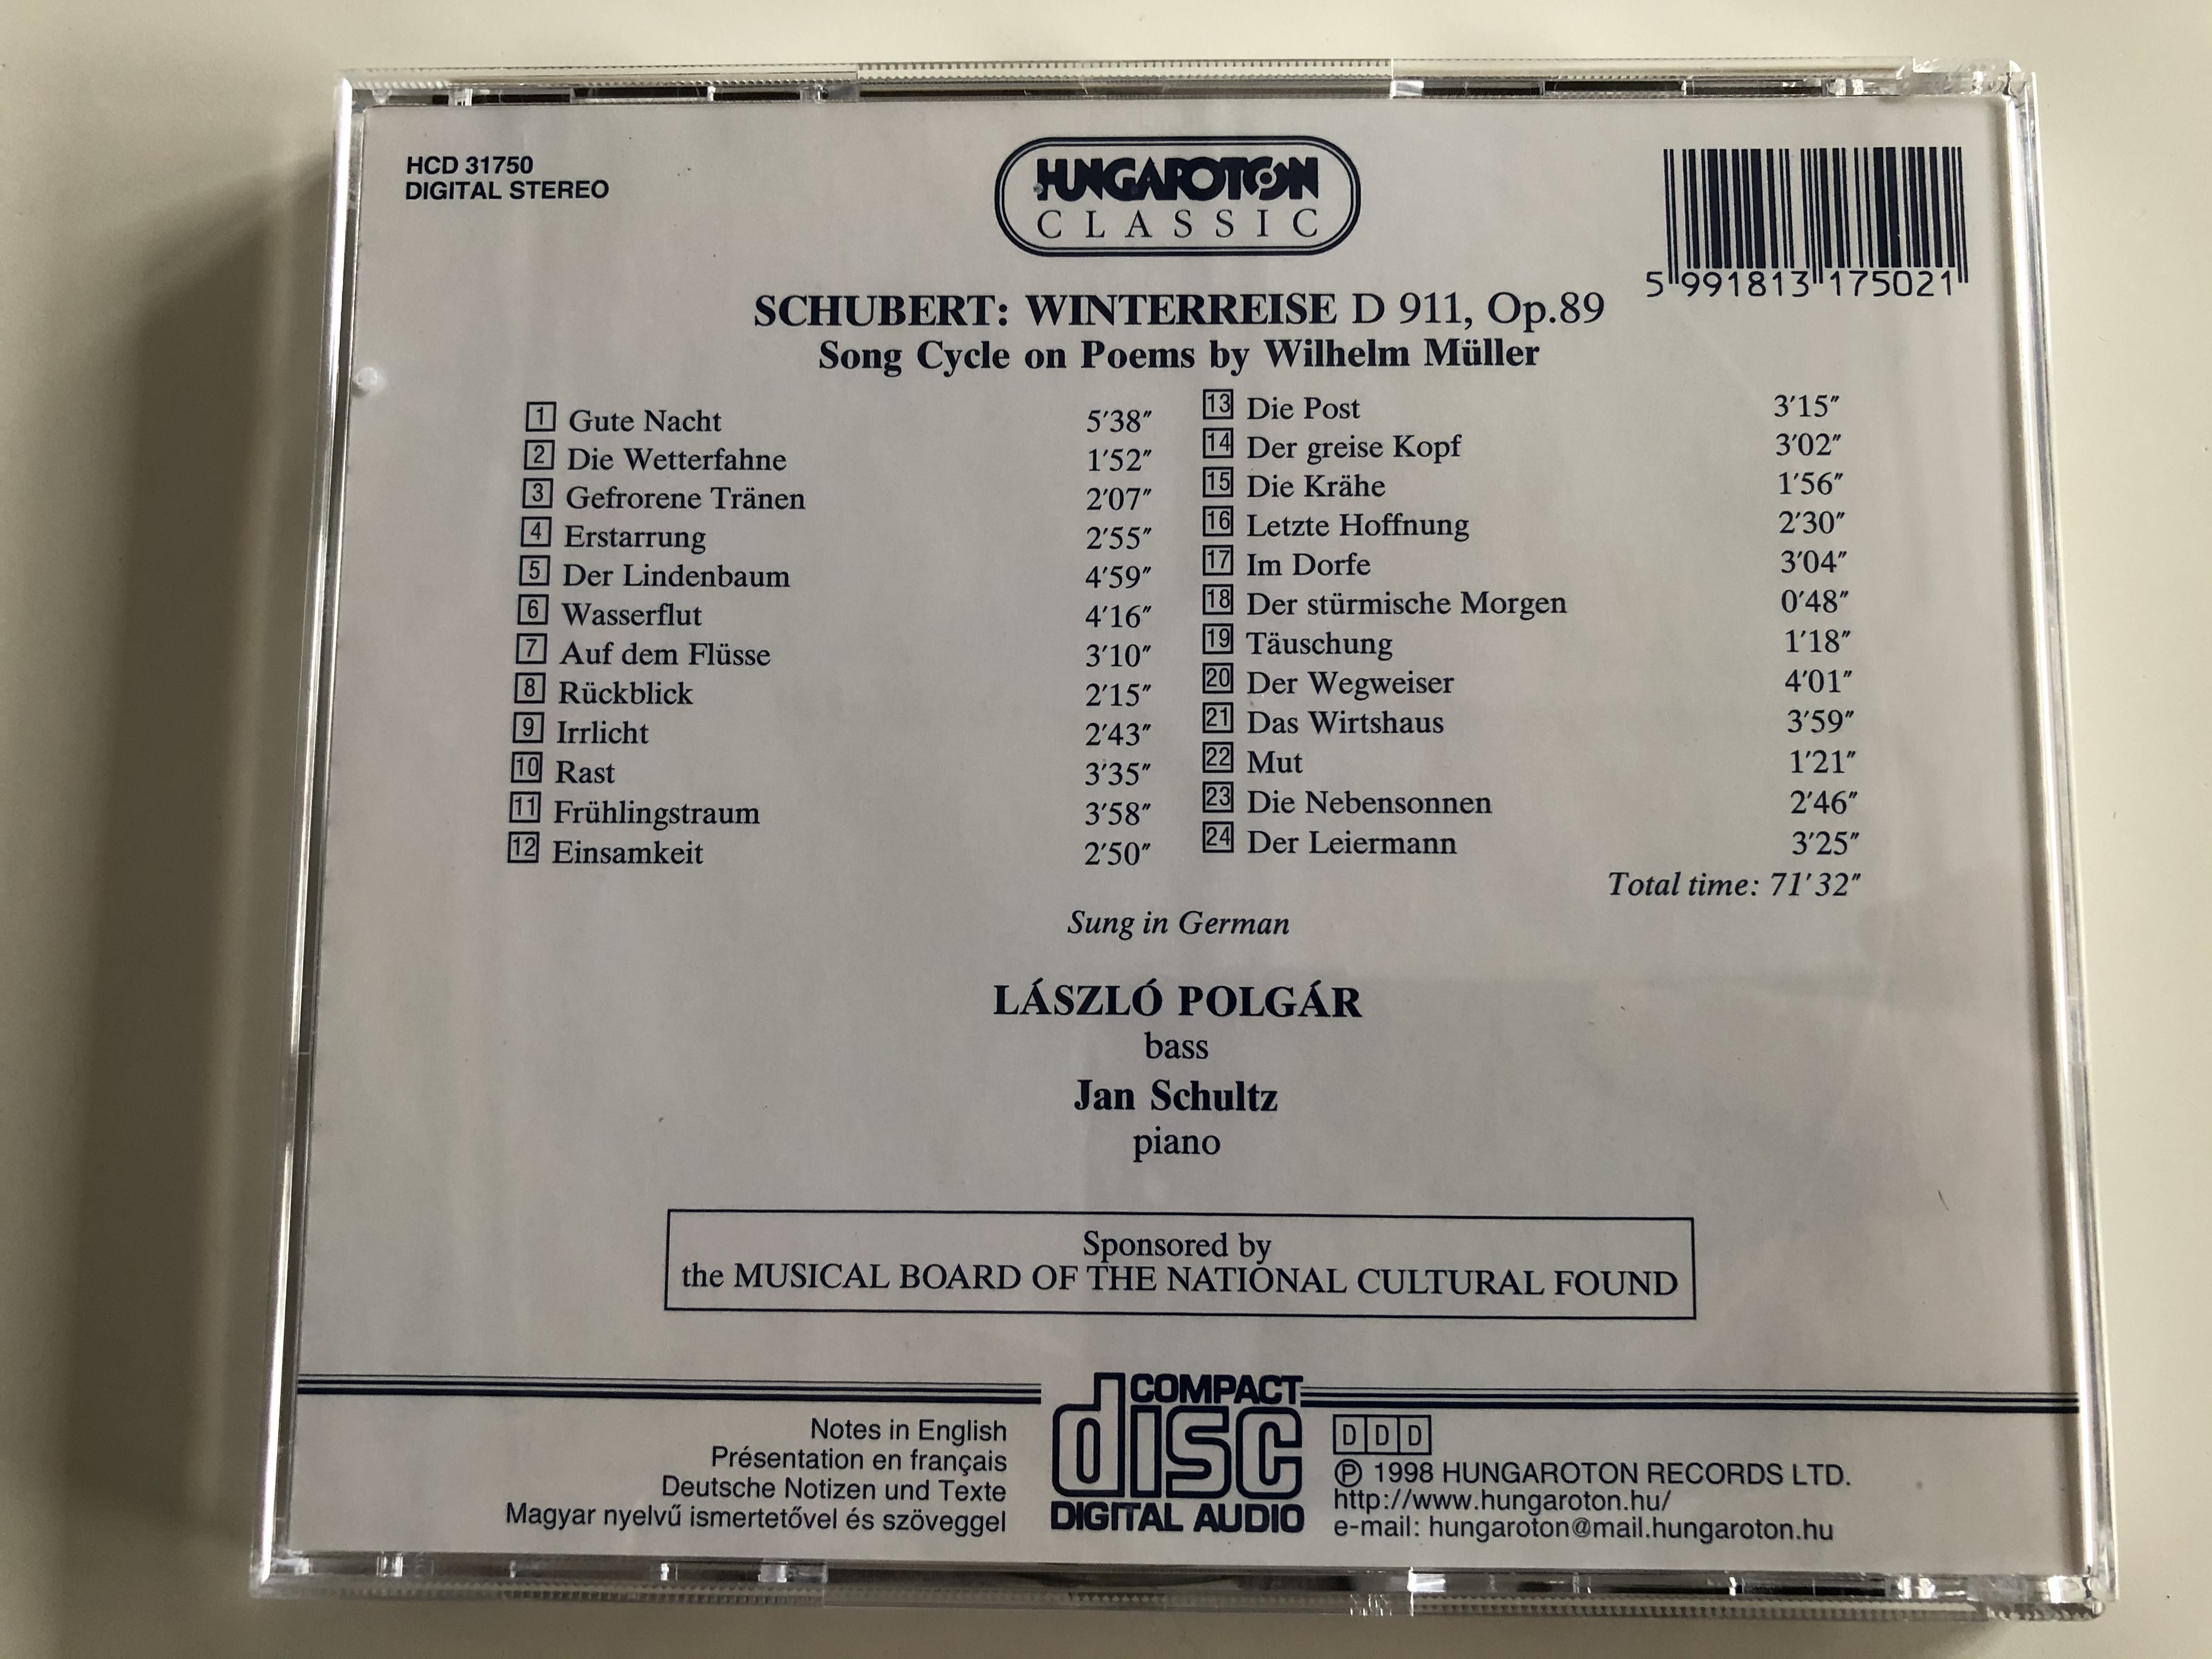 schubert-winterreise-laszlo-polgar-bass-jan-schultz-piano-hungaroton-classic-audio-cd-1998-stereo-hcd-31750-10-.jpg